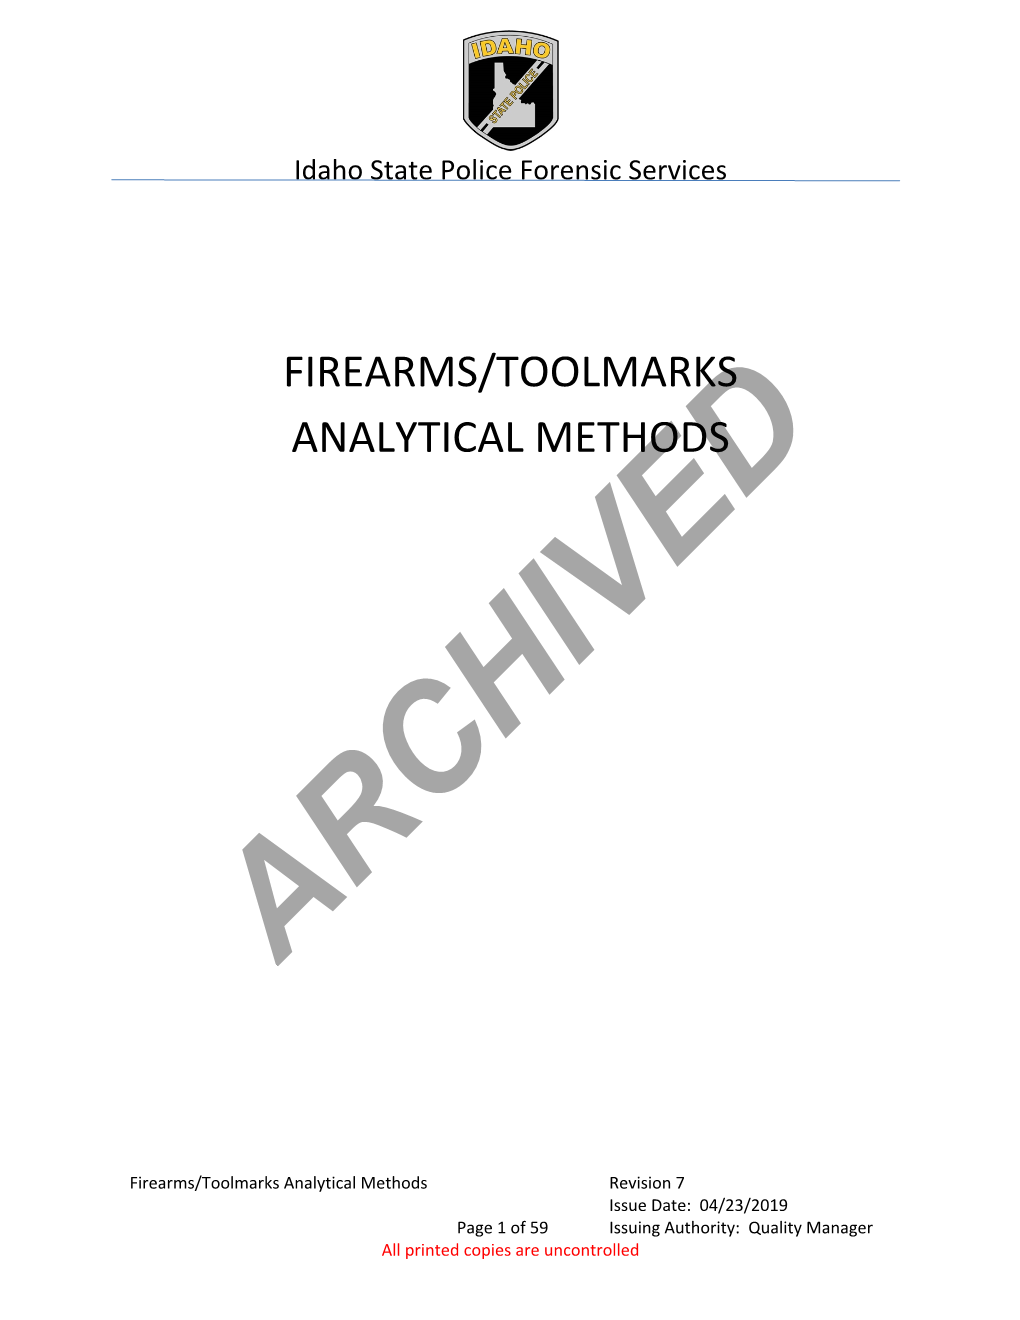 Firearms/Toolmarks Analytical Methods